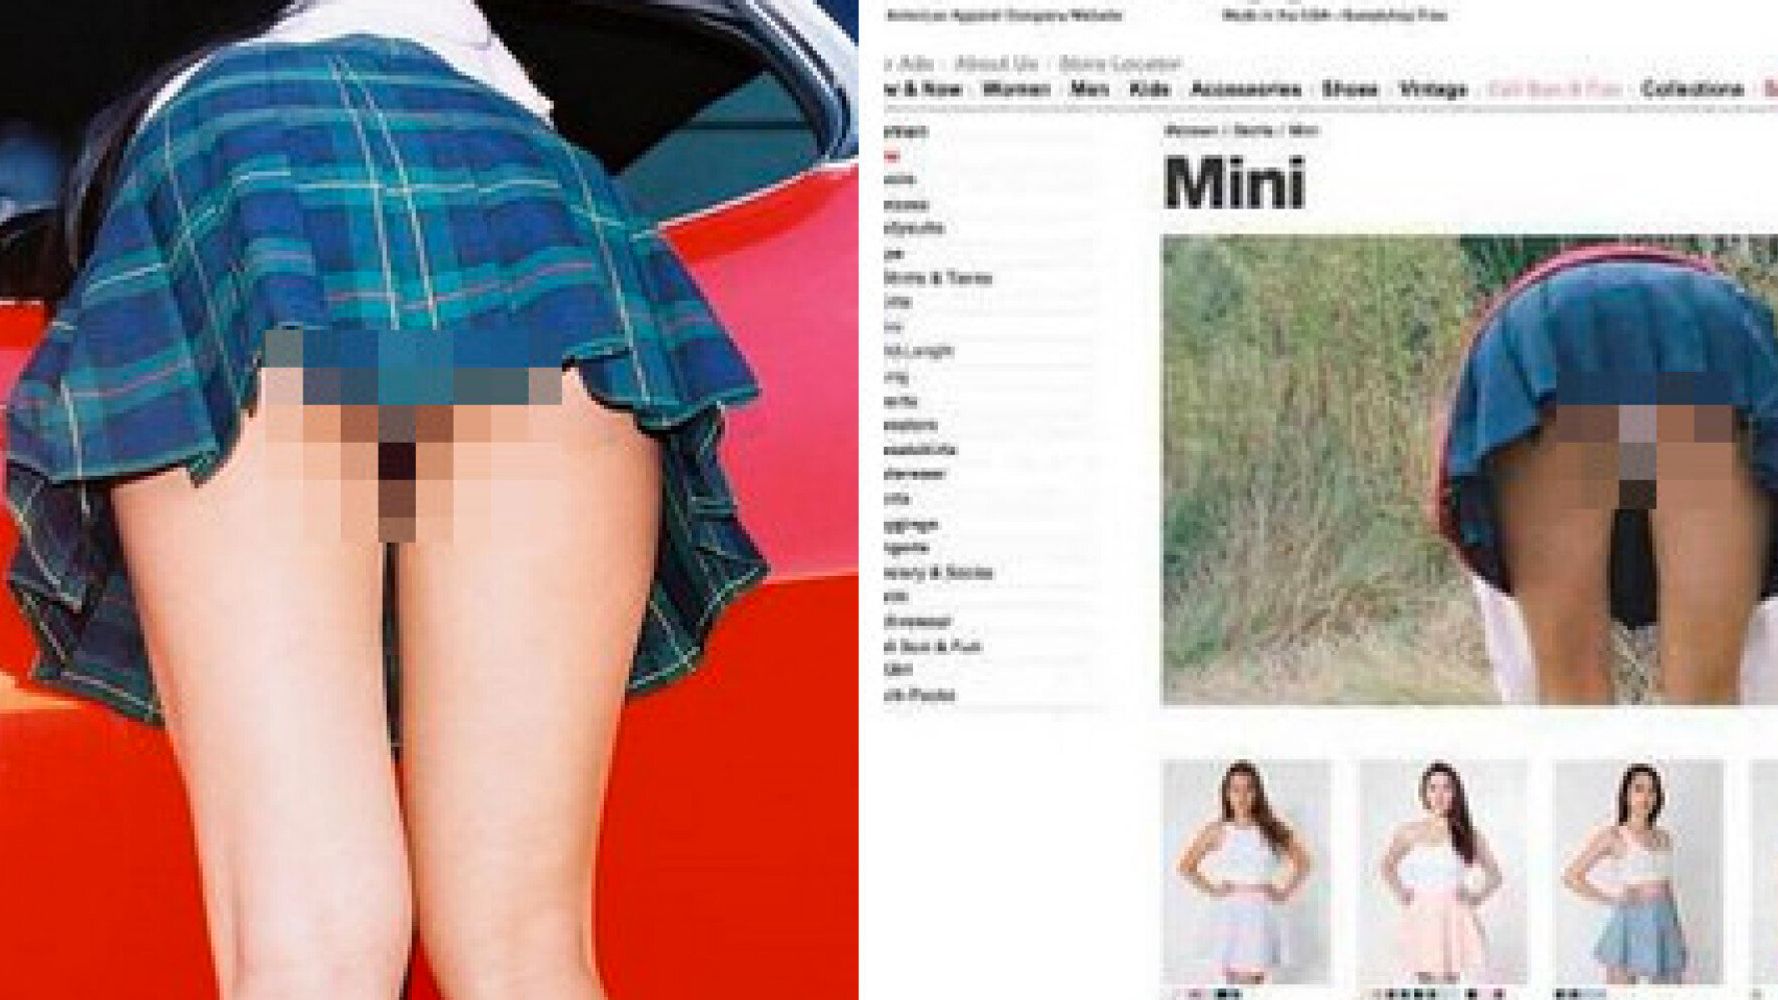 American Apparel Girls Porn - American Apparel 'Sexy School Girl' Skirt Image Labelled ...